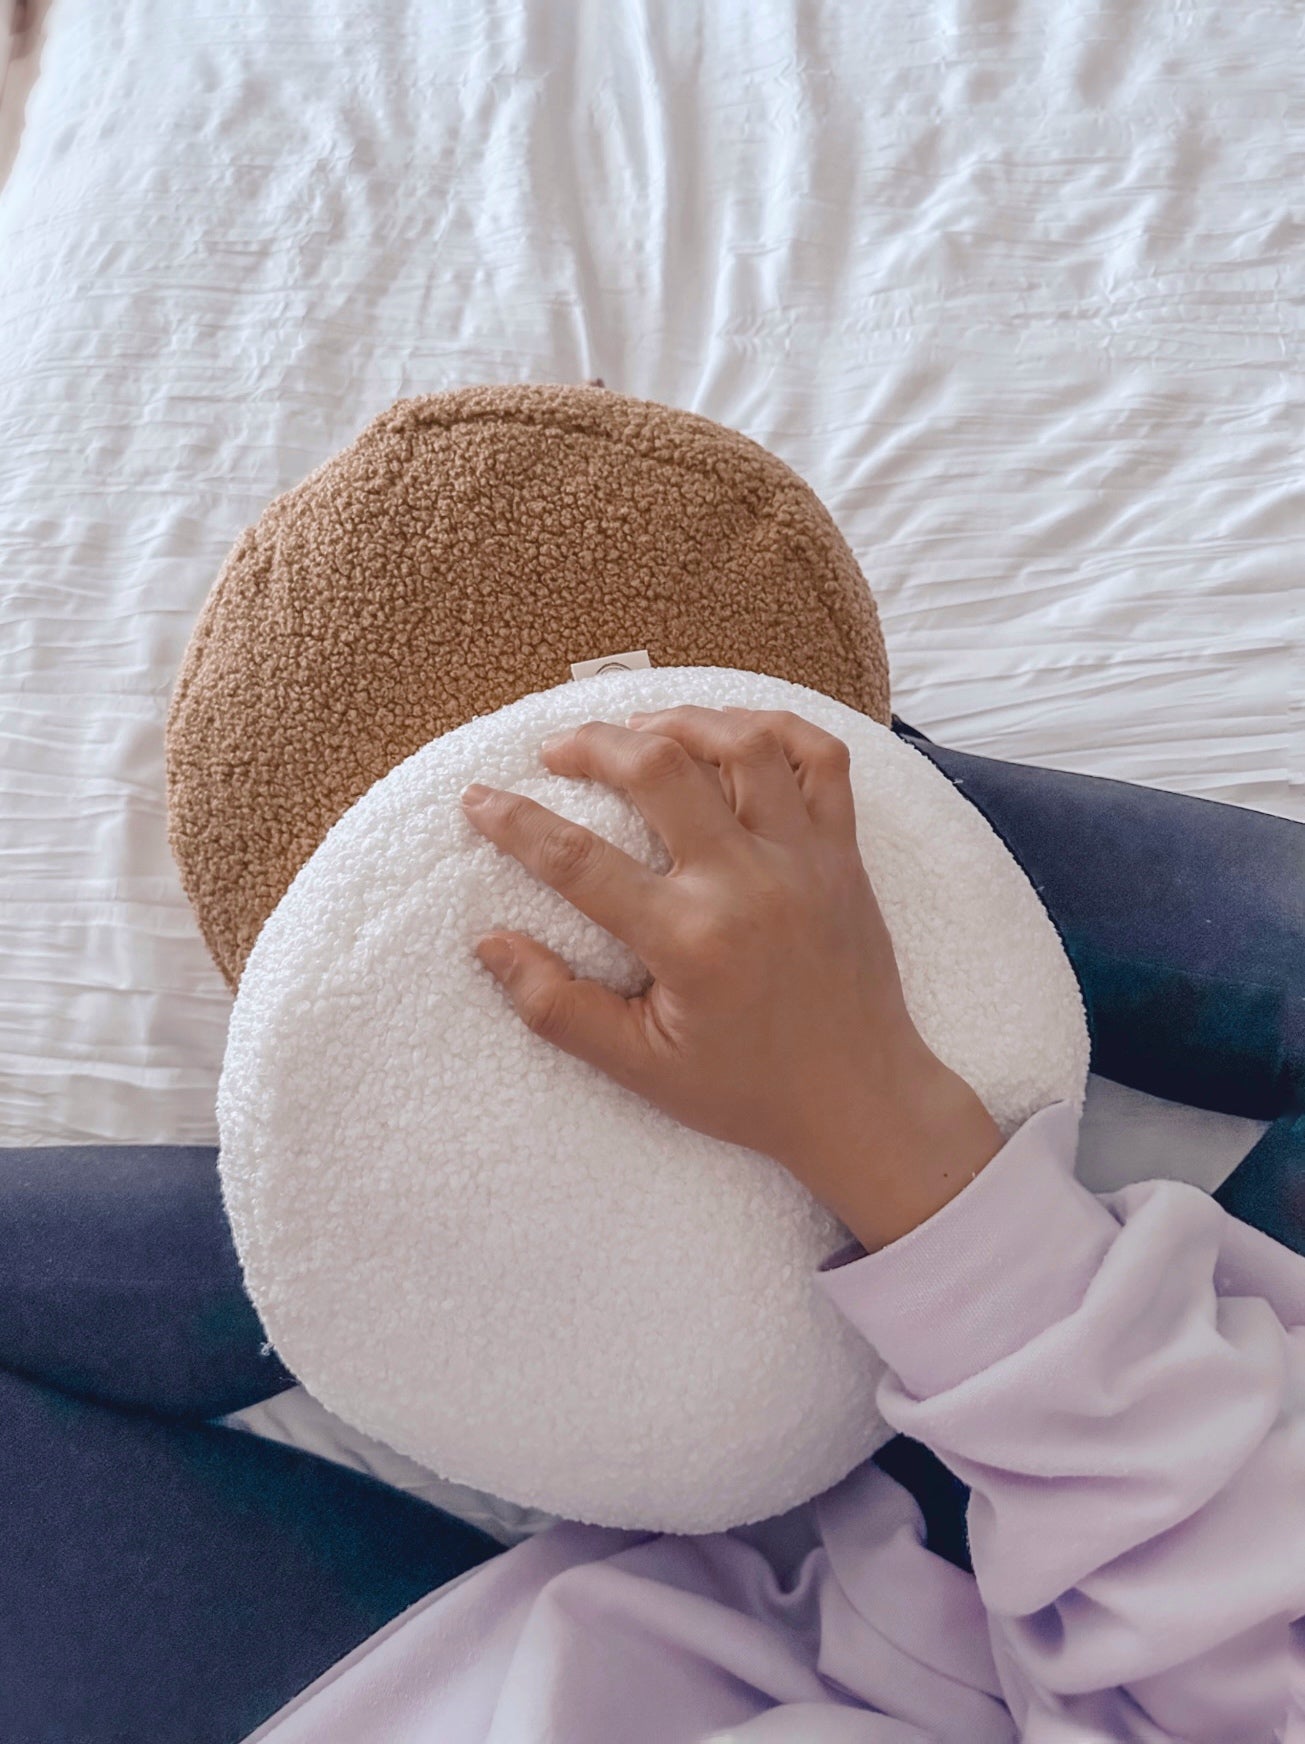 Fluffy round cushions